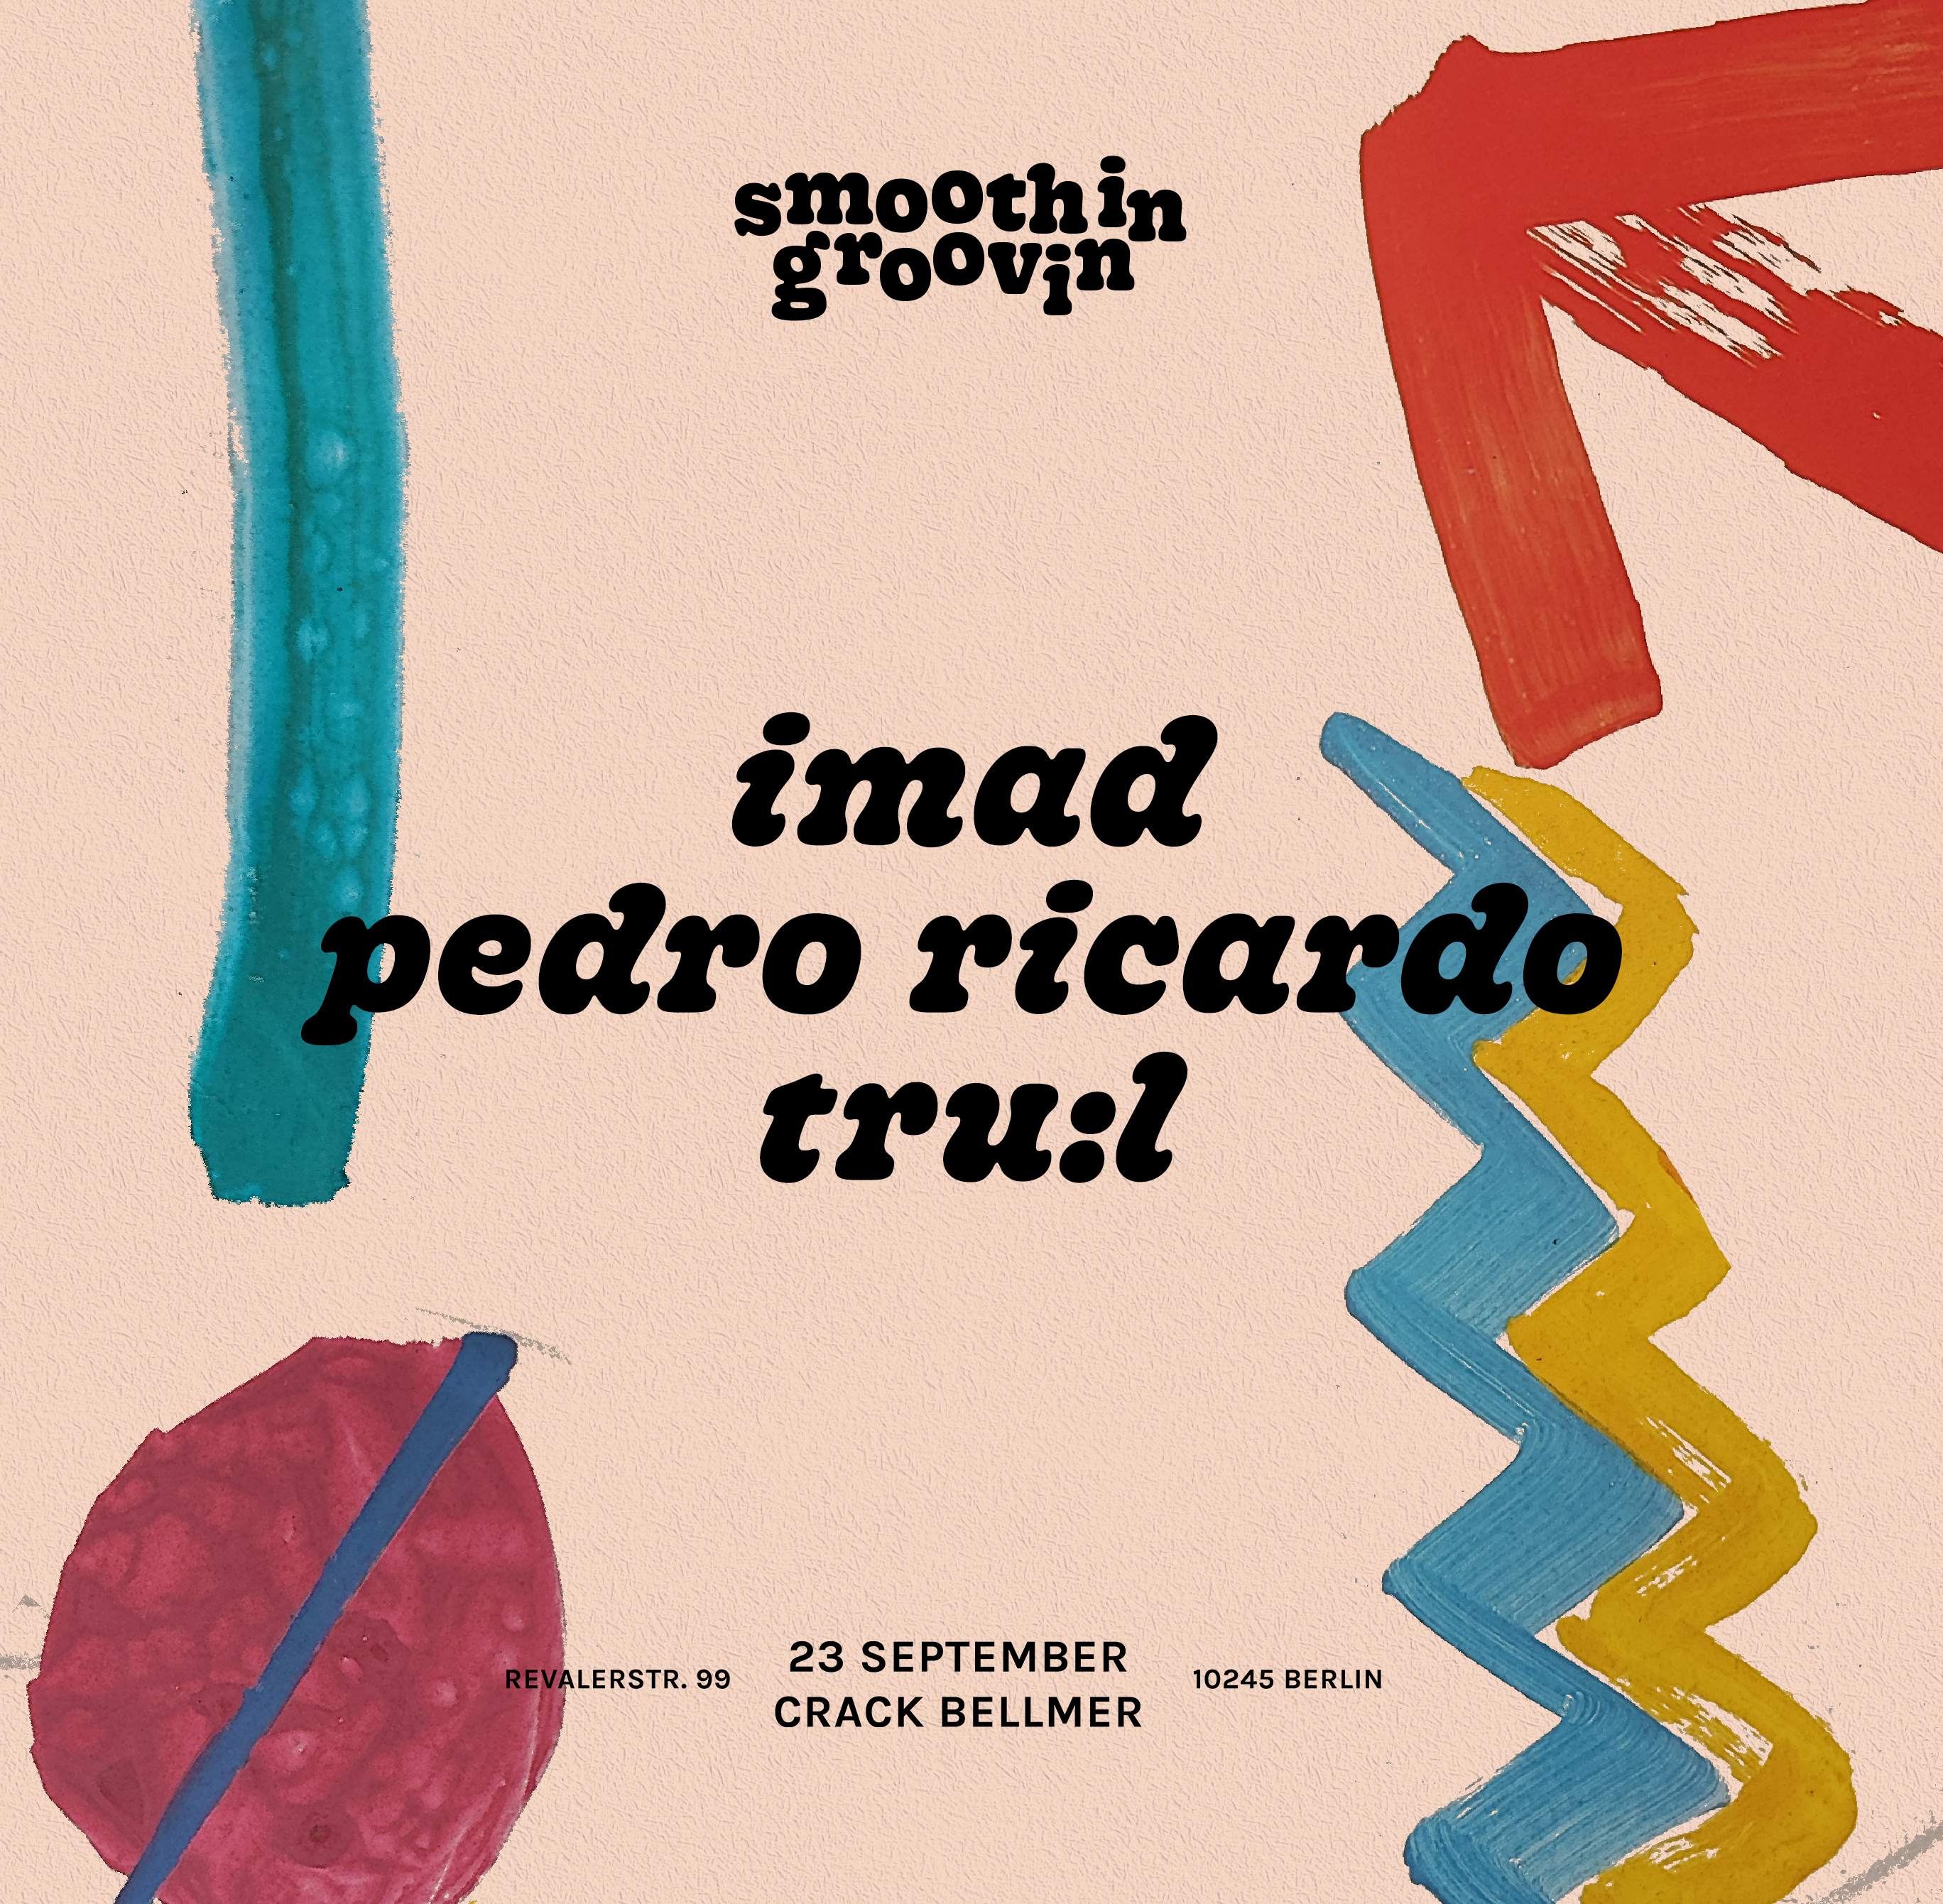 SMOOTHIN GROOVIN #8 /w Imad, Pedro Ricardo, Tru:L - Flyer front